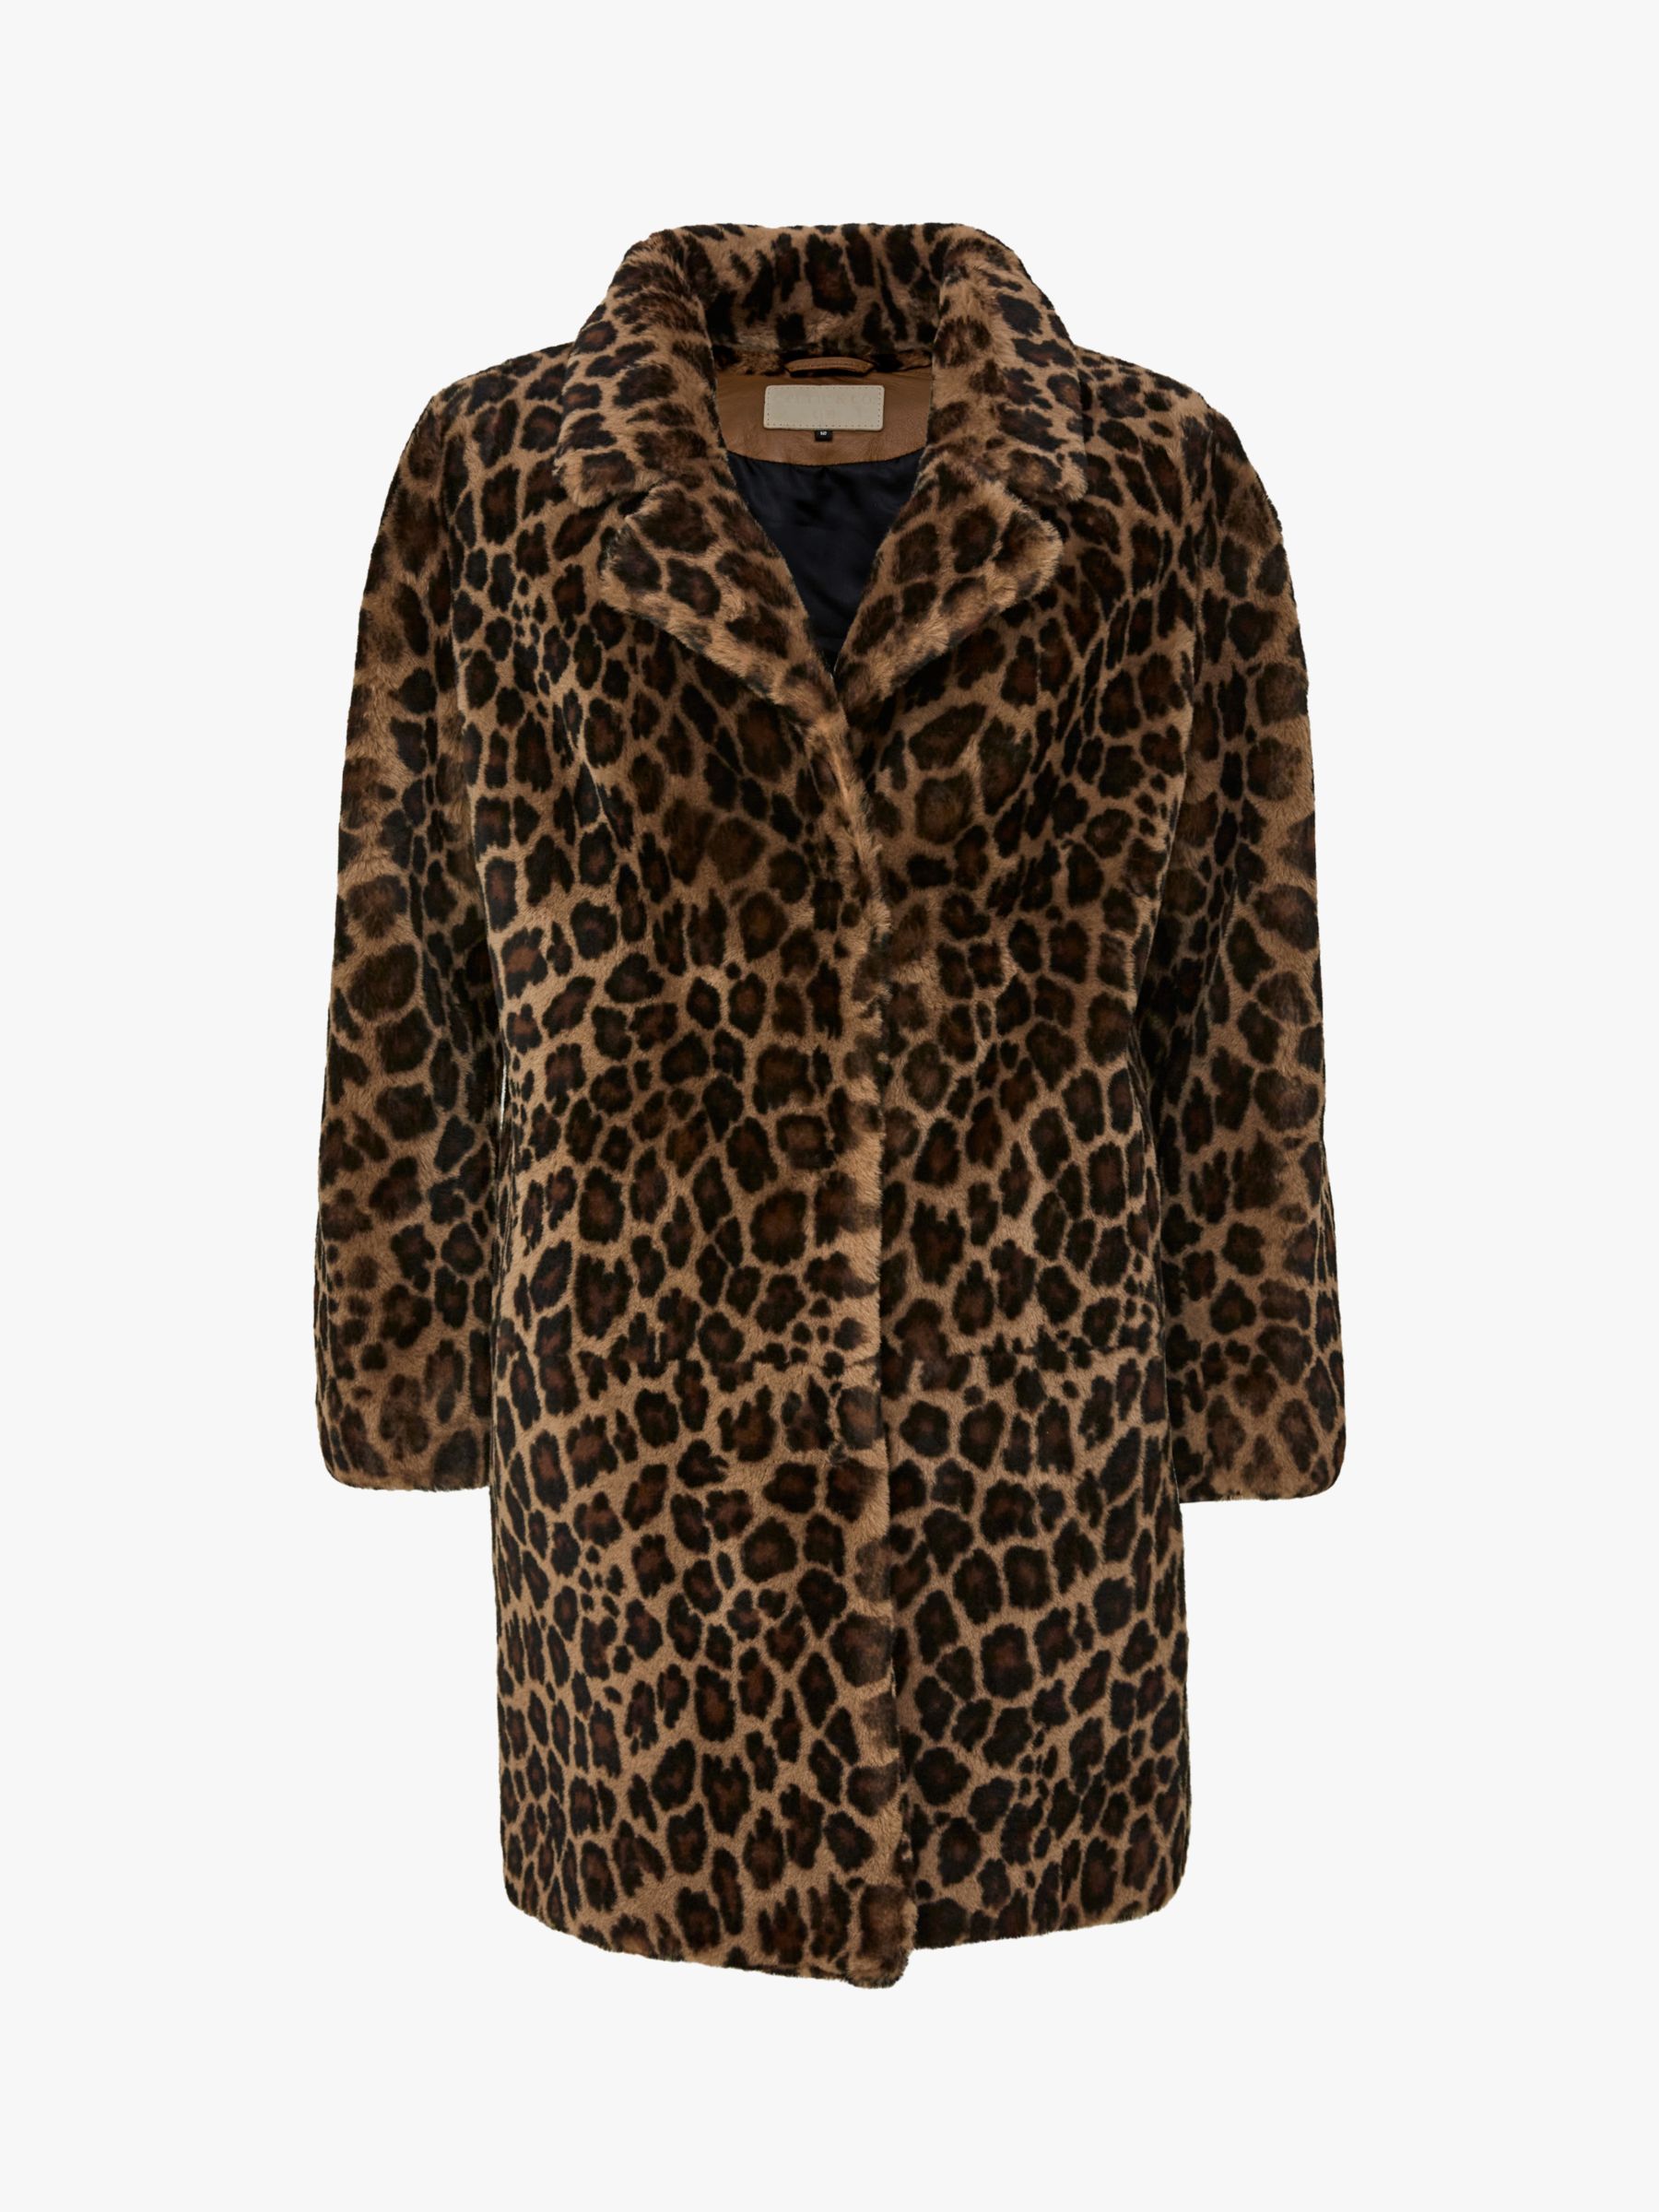 Celtic & Co. Leopard Print Sheepskin Coat, Brown, 8